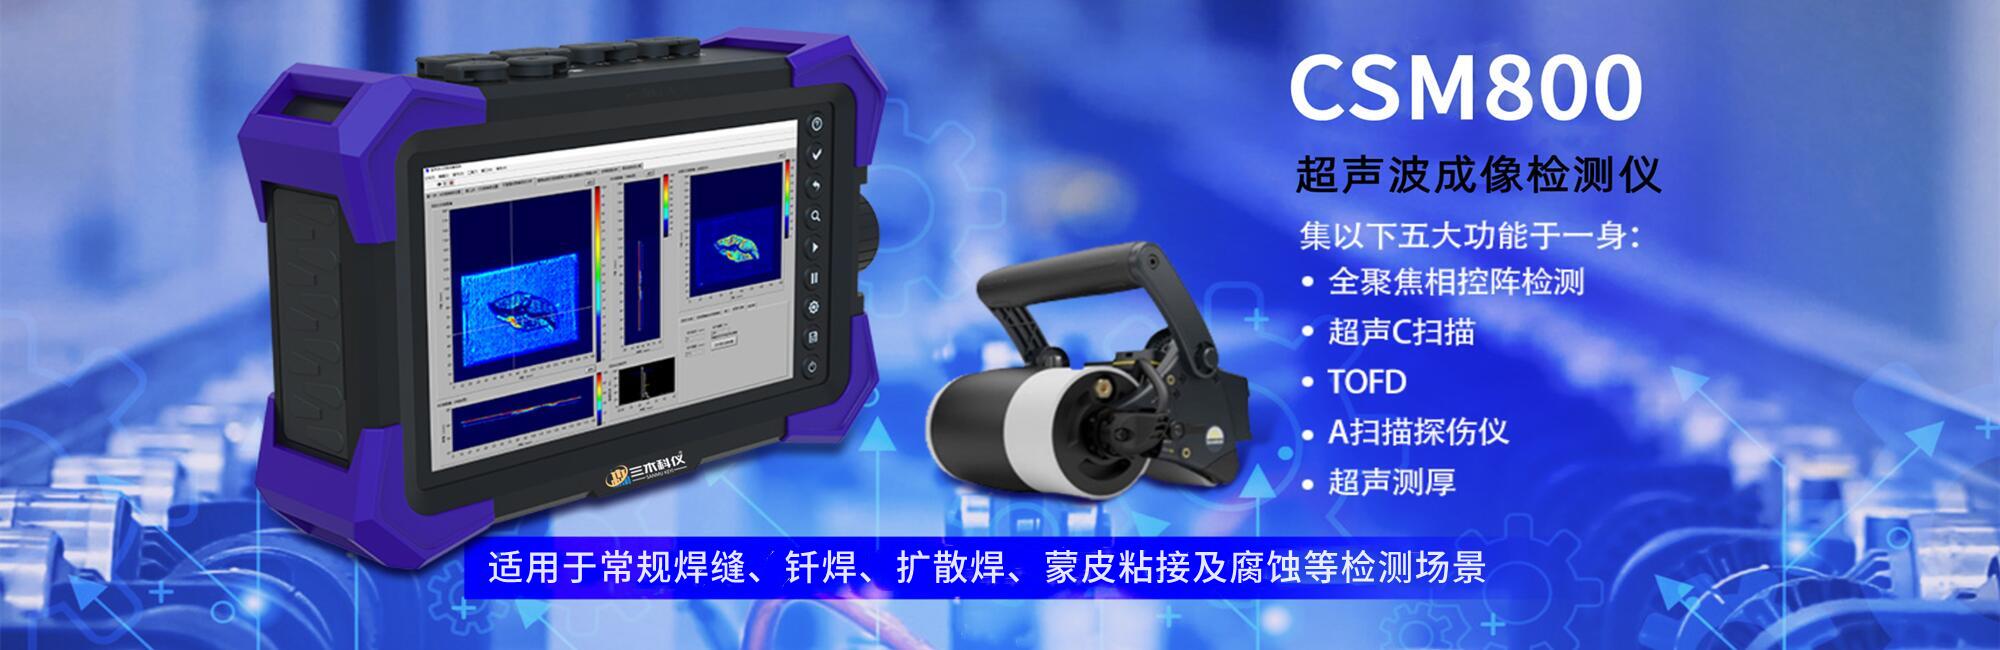 CSM800便携式超声波成像检测仪